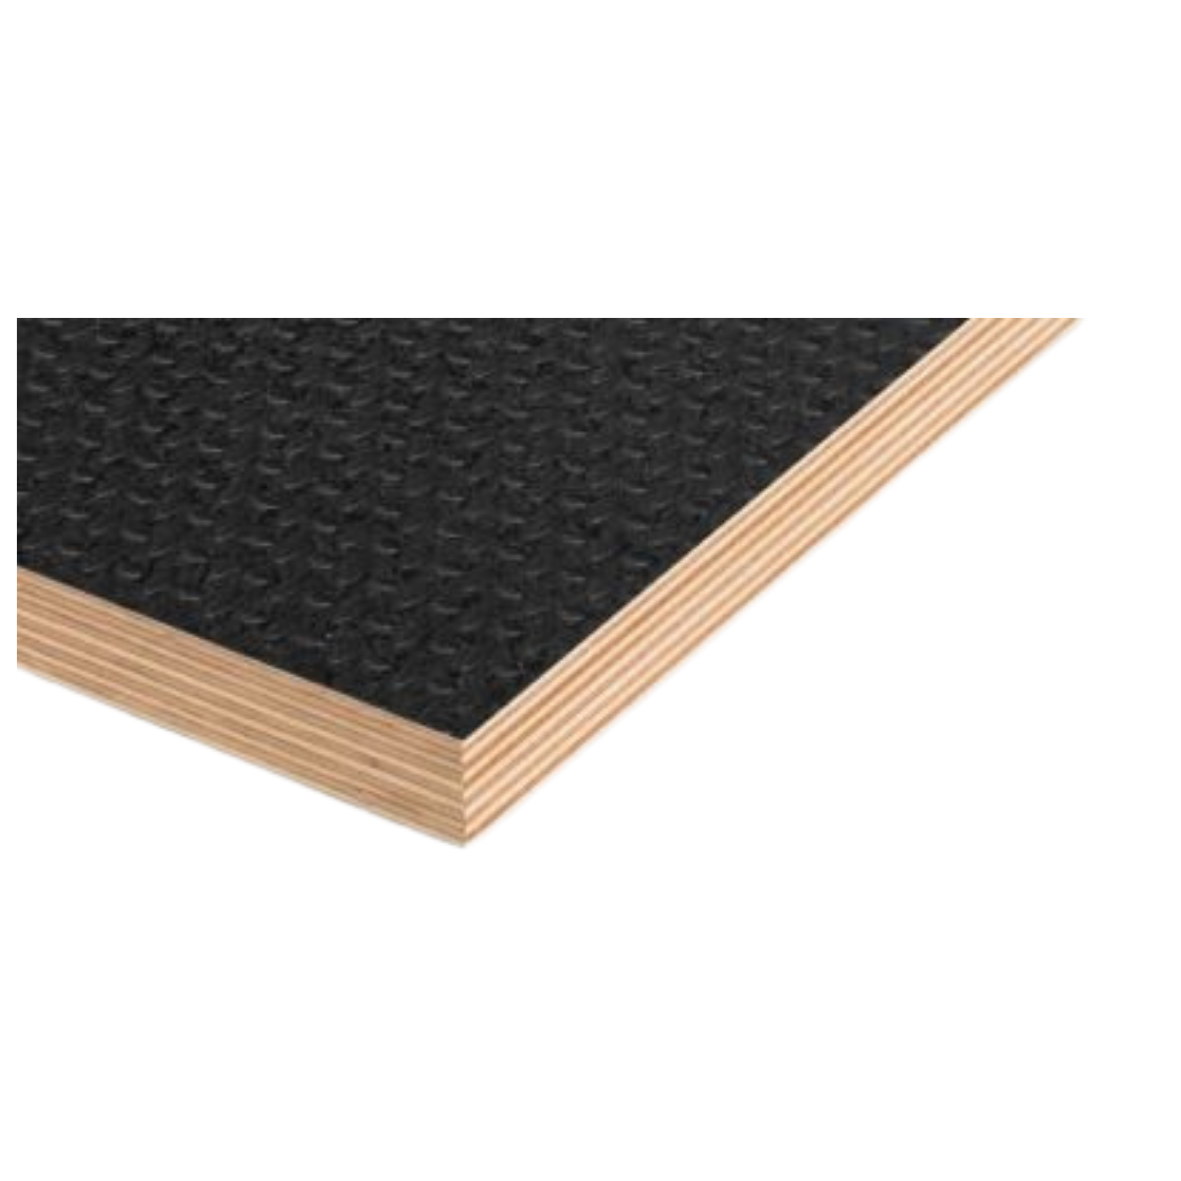 Antiskid playwood - Anti-slip TEGO formwork plywood 21 mm thickness, 1250 x 2500 mm, https:maxbau.ro